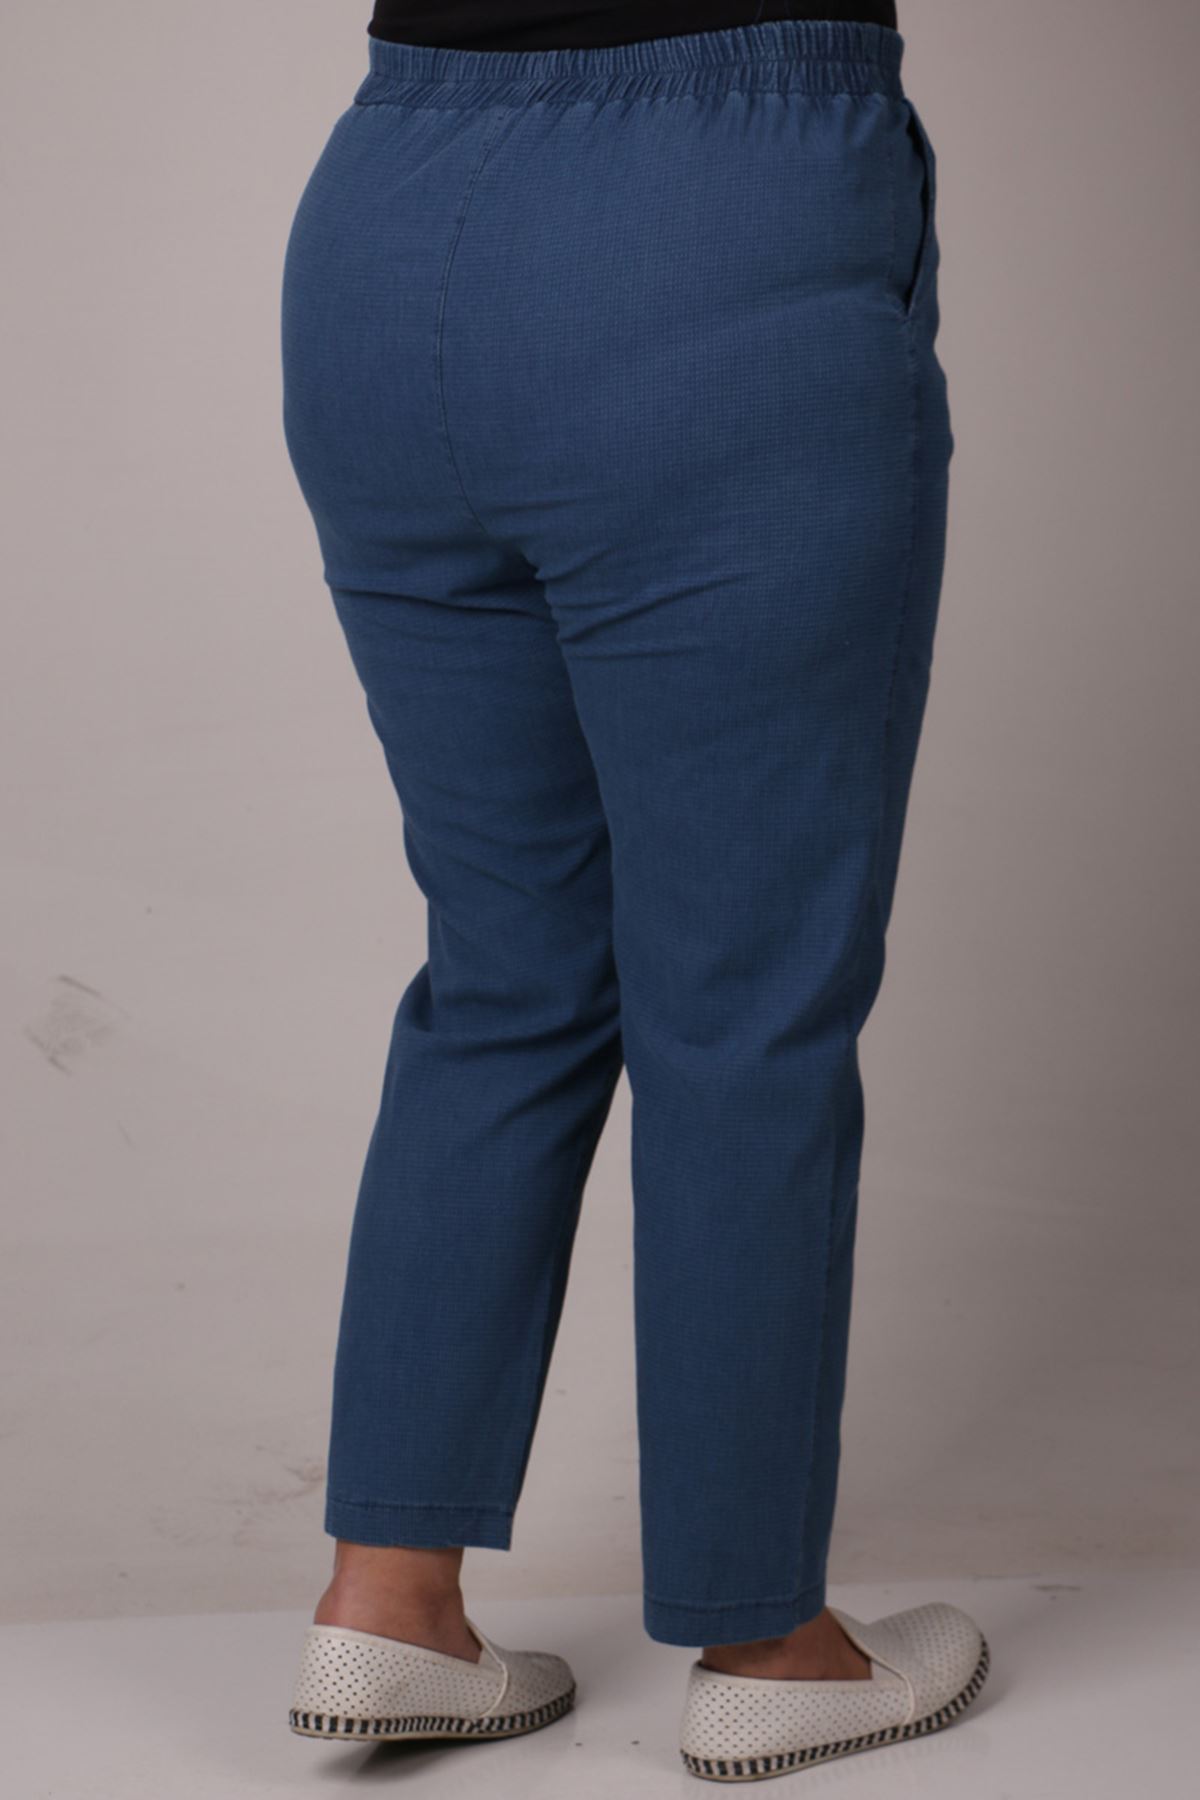 9123 Plus Size Elastic Waist Skinny Leg Jeans - Dark Navy Blue